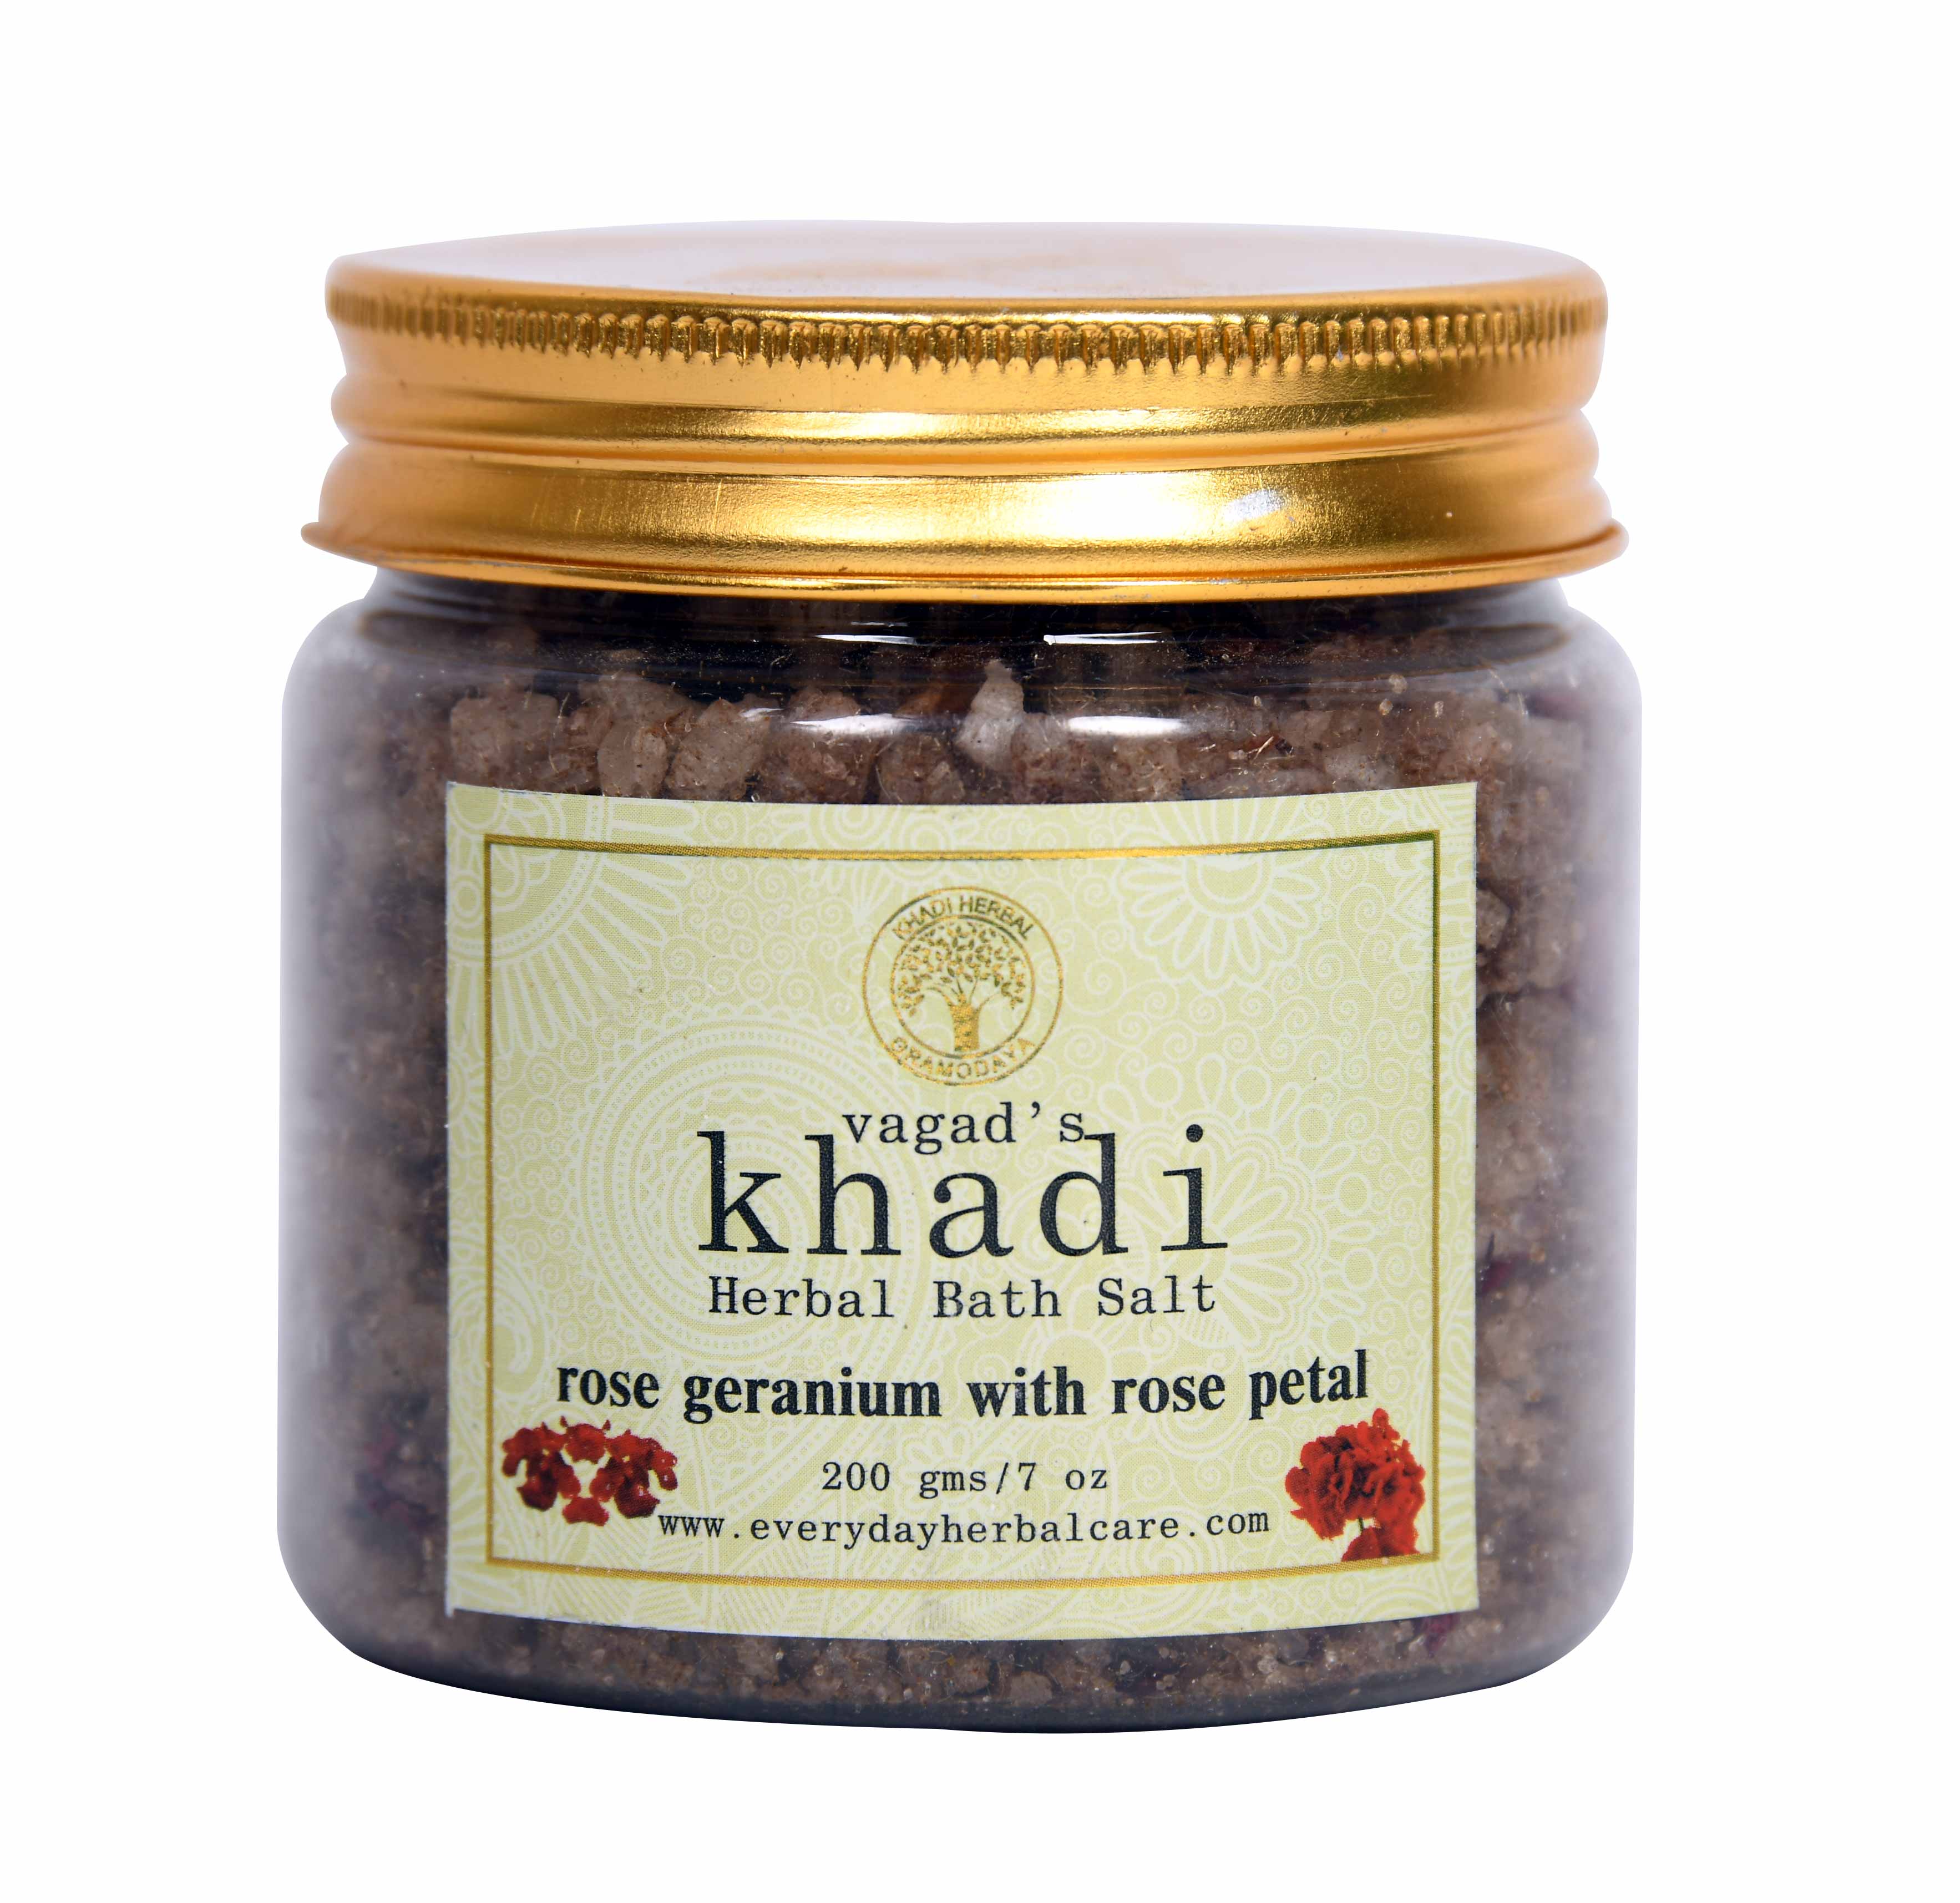 Vagad's Khadi Rose Geranium With Rose Petals Herbal Bath Salt